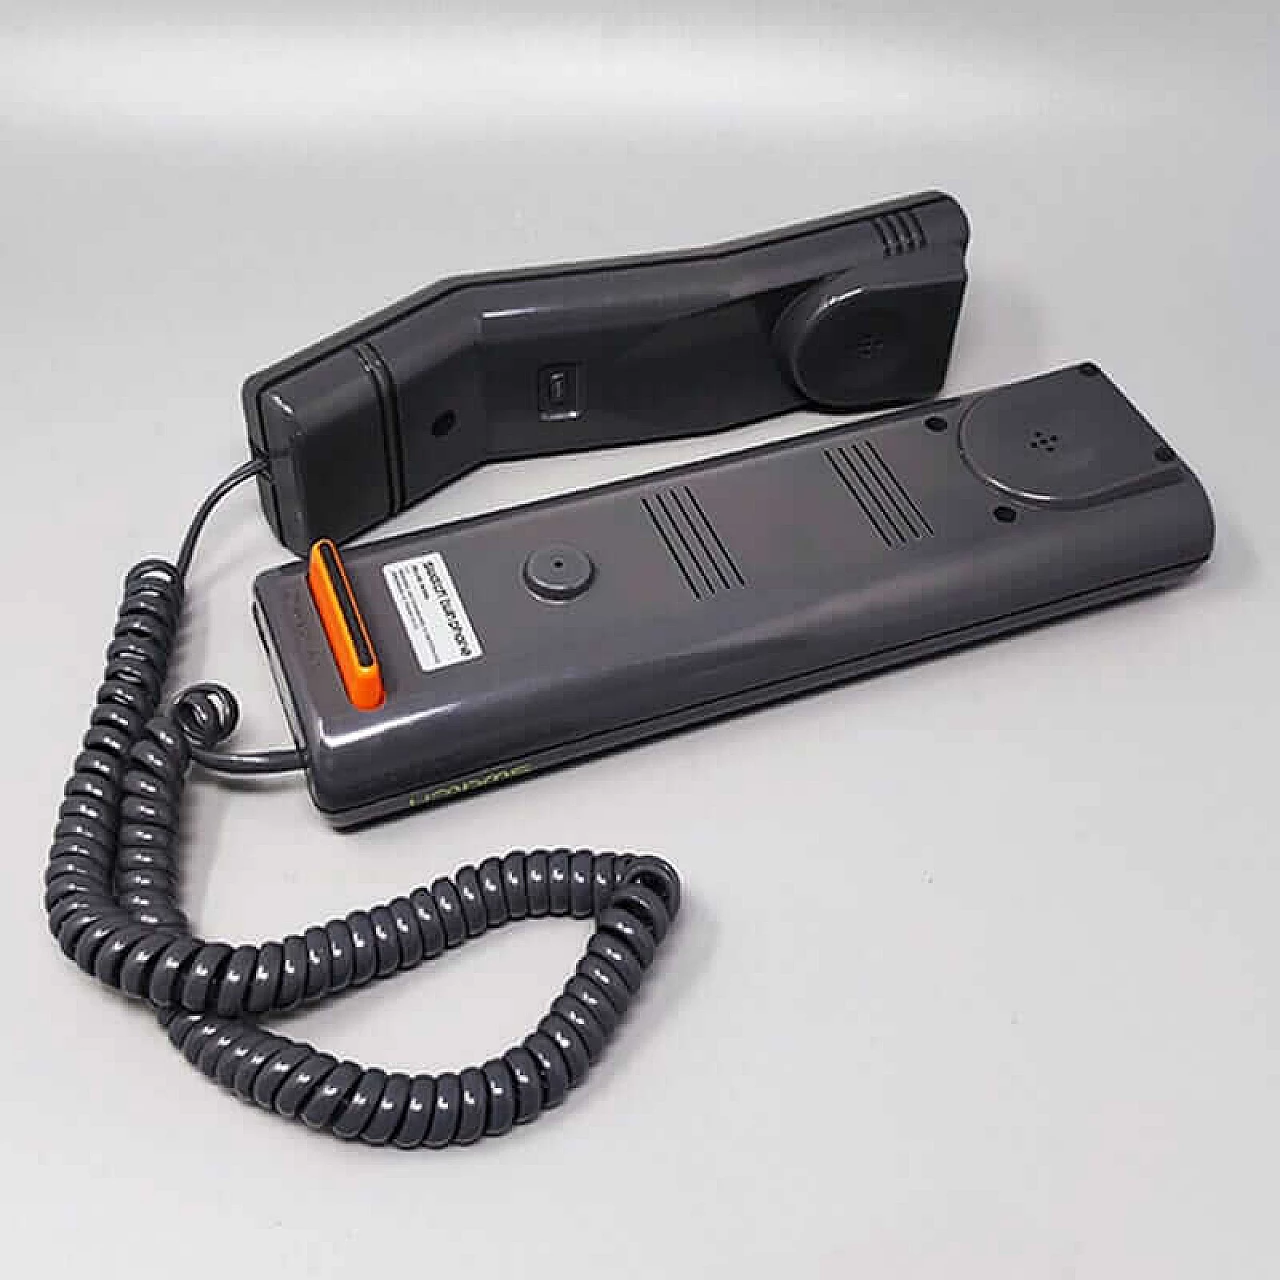 Deco Swatch Twin Phone landline phone, 1980s 8